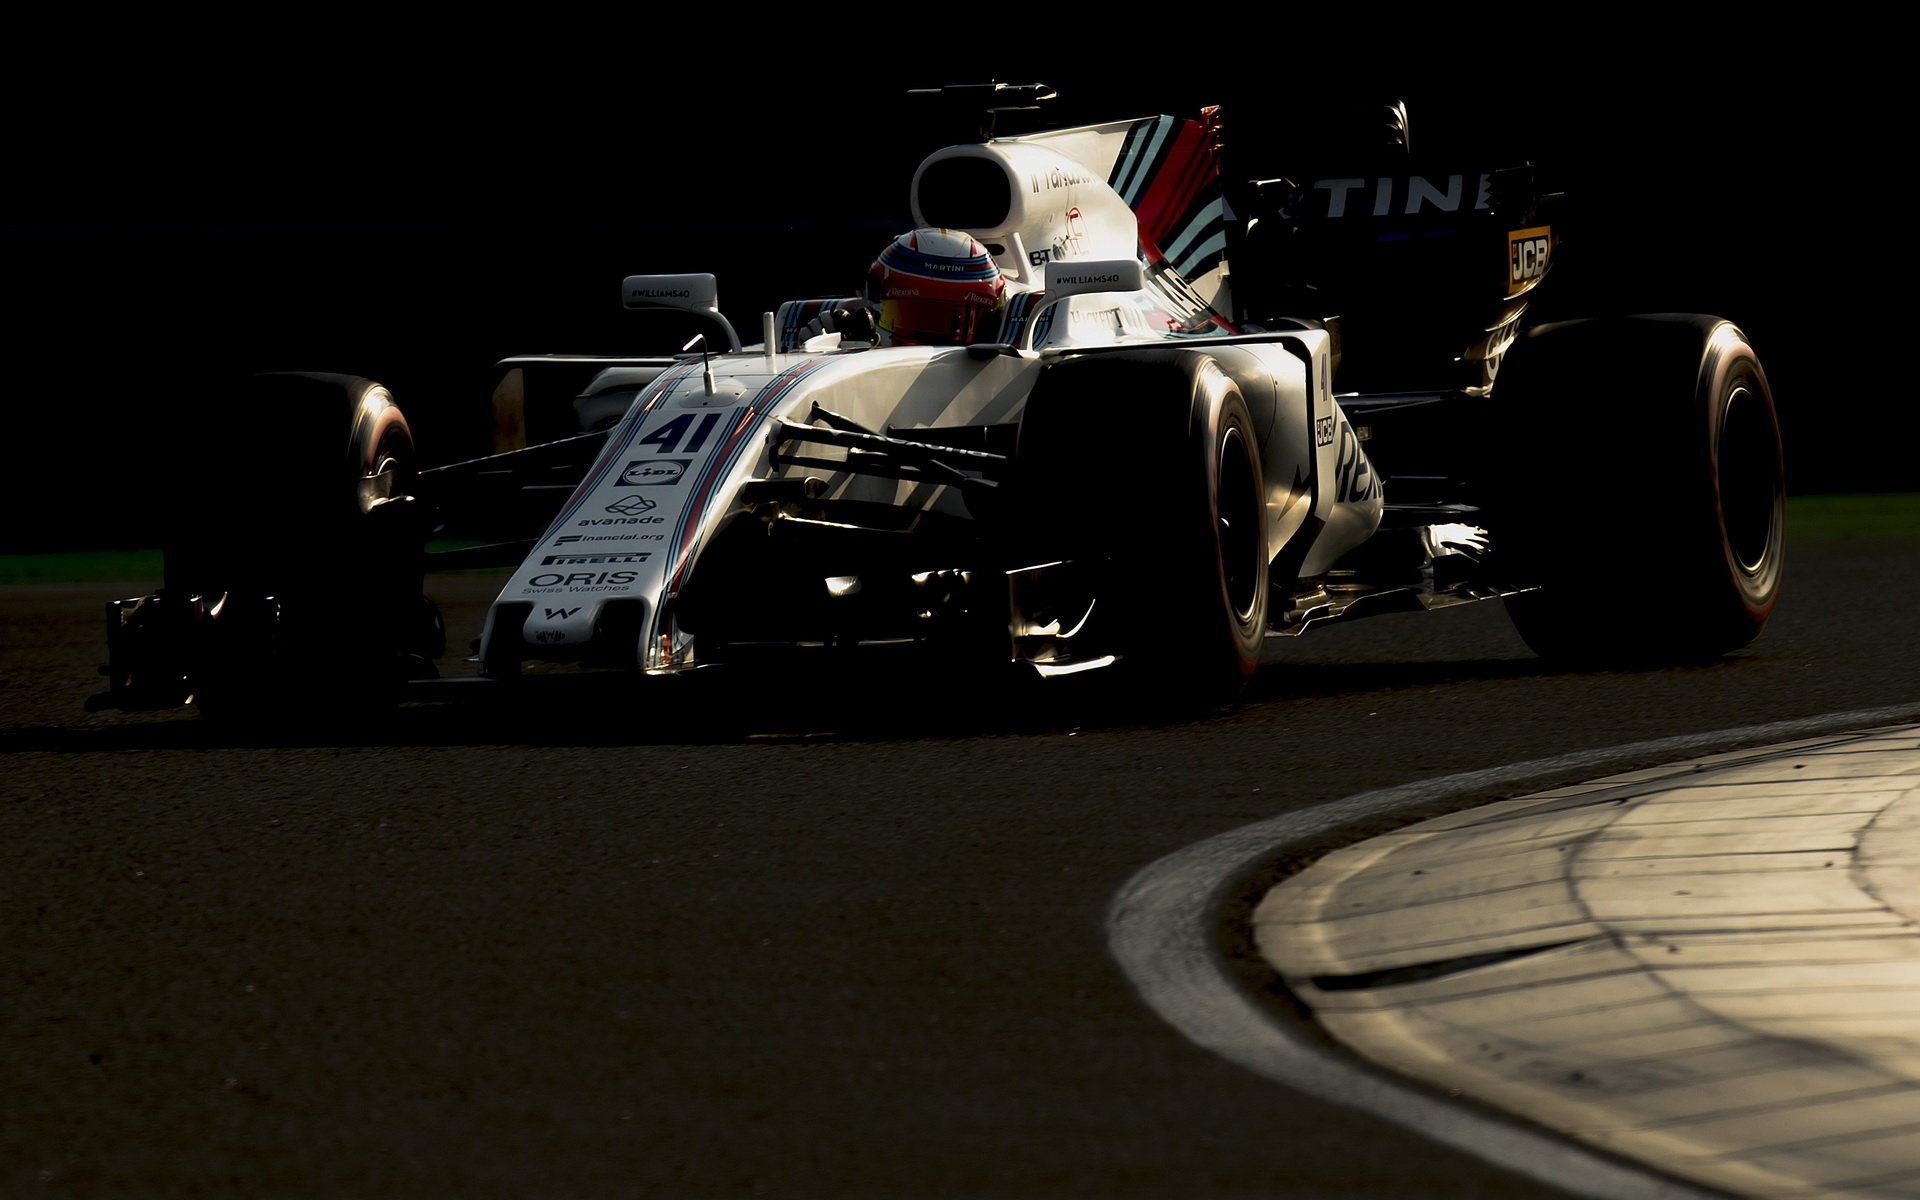 Luca Ghiotto testuje druhý den vůz Williams FW38 - Mercedes v Maďarsku